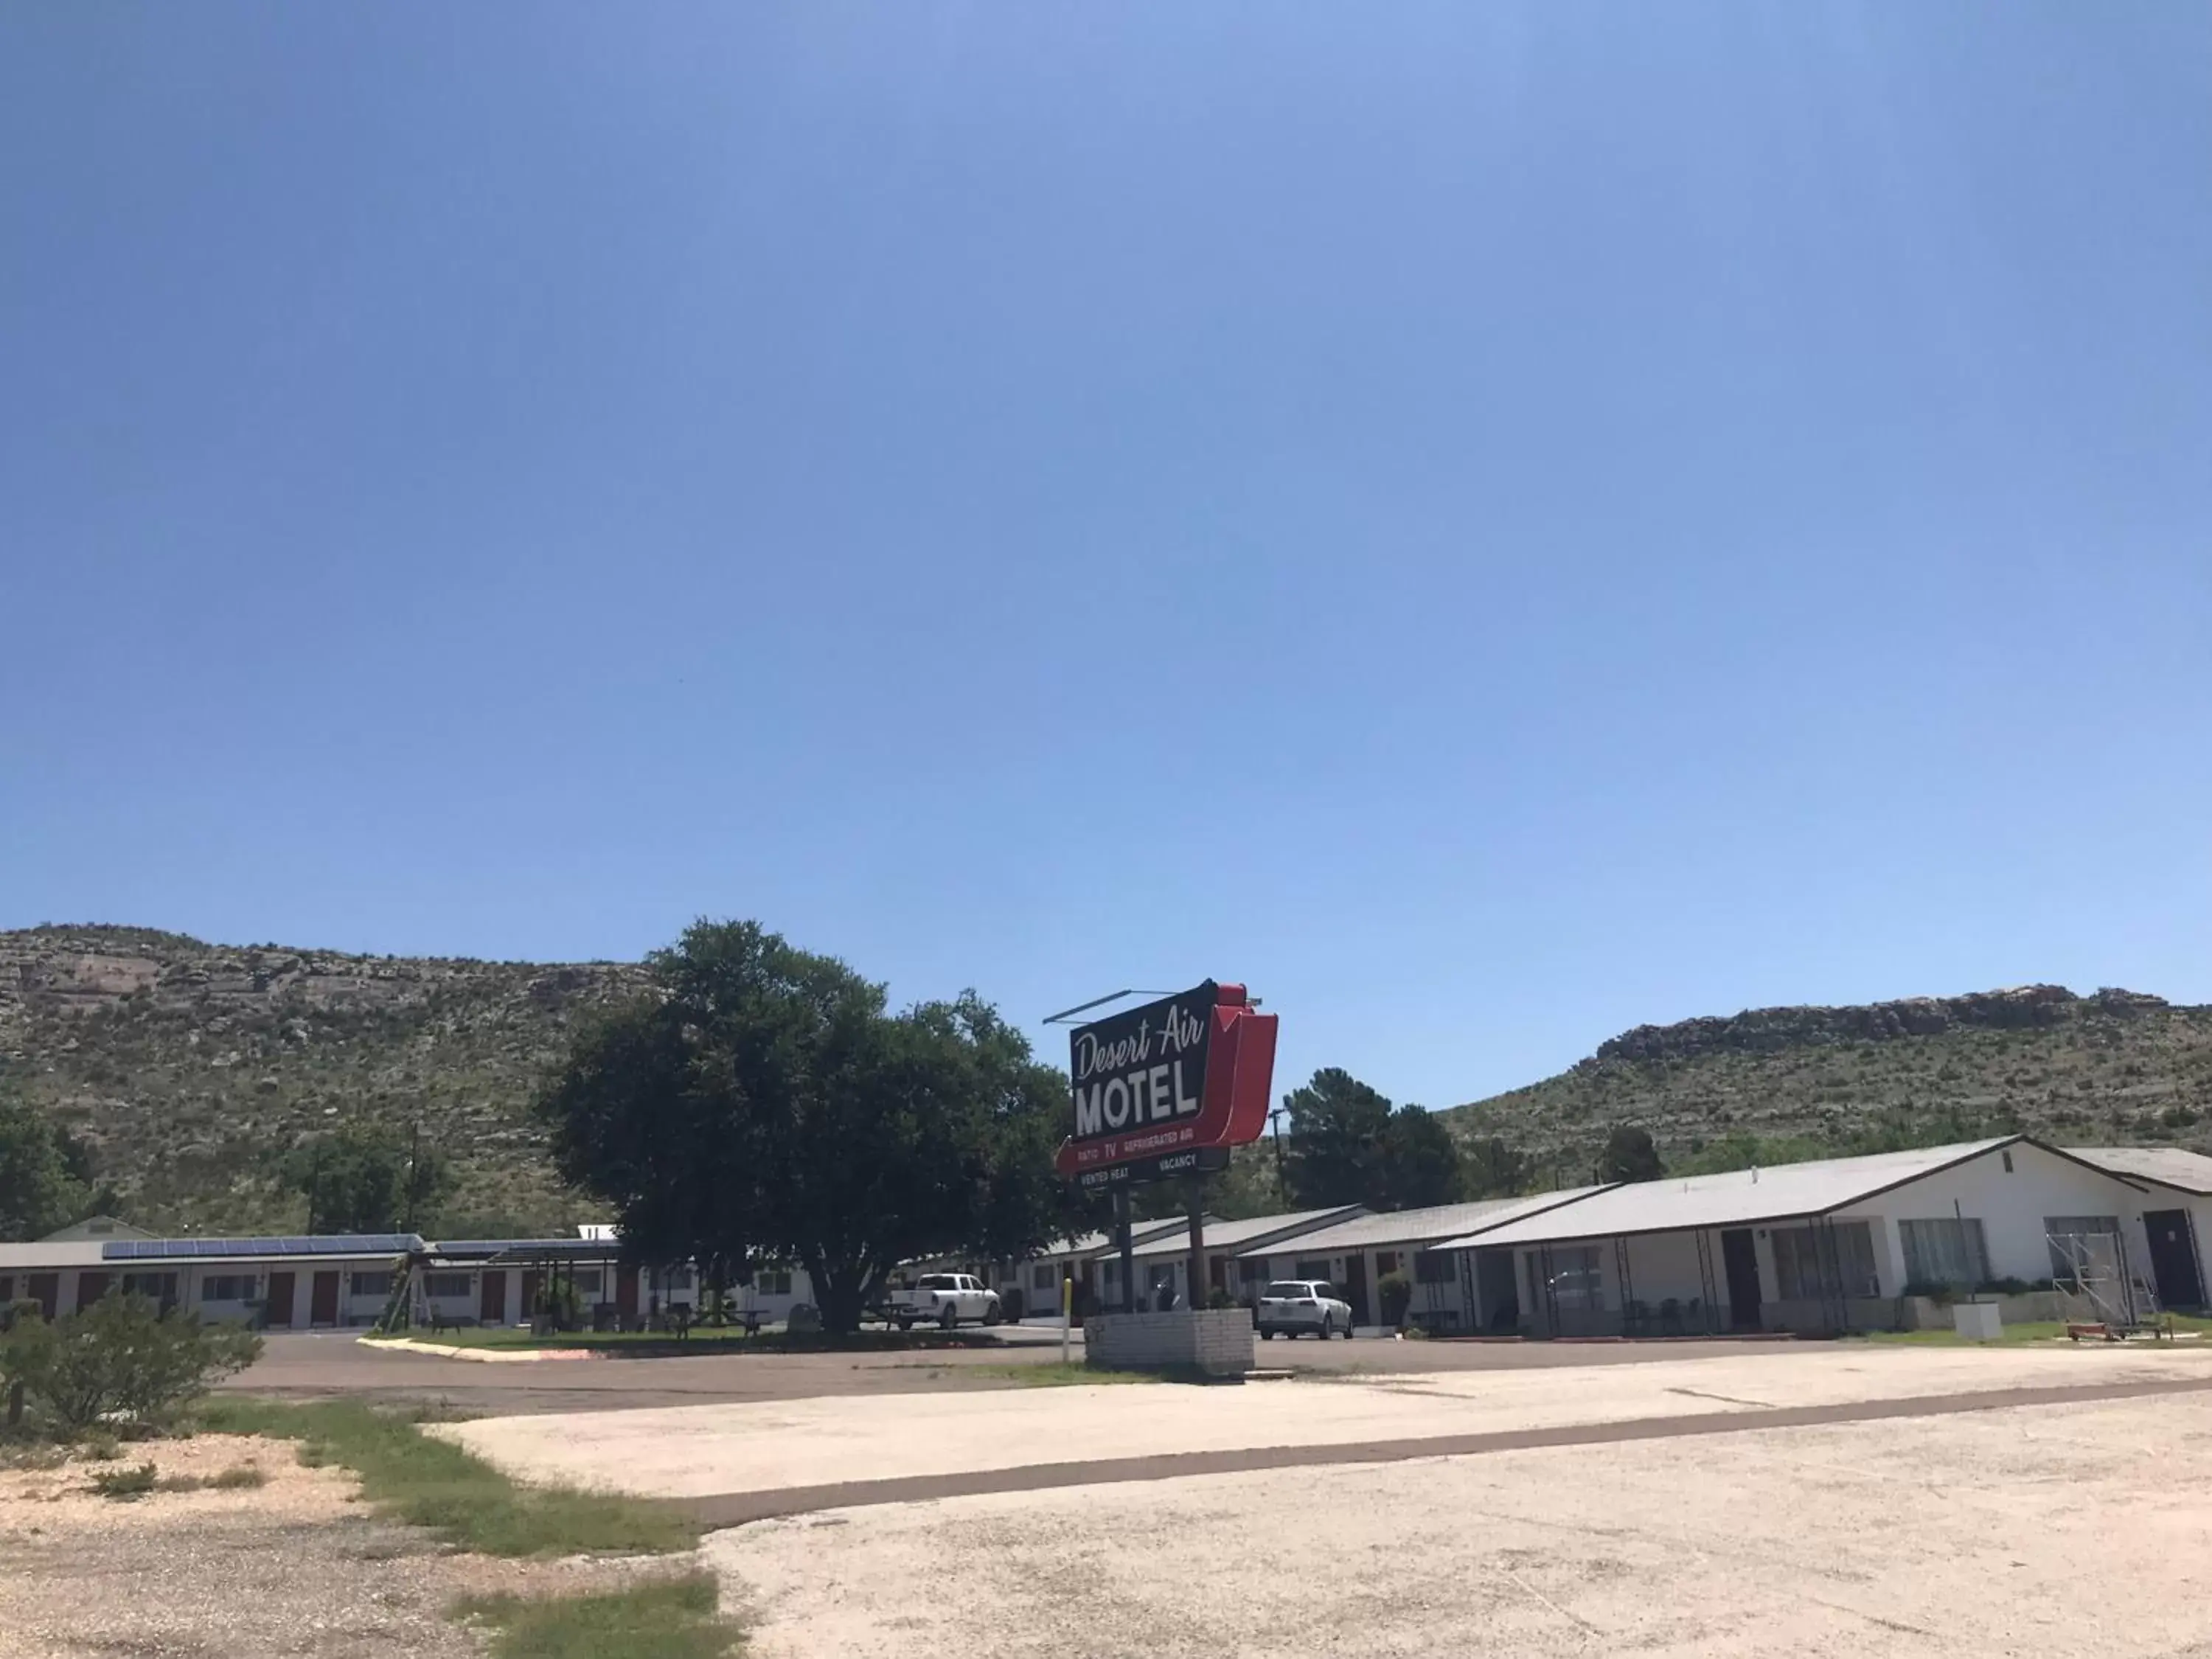 Property Building in Desert Air Motel